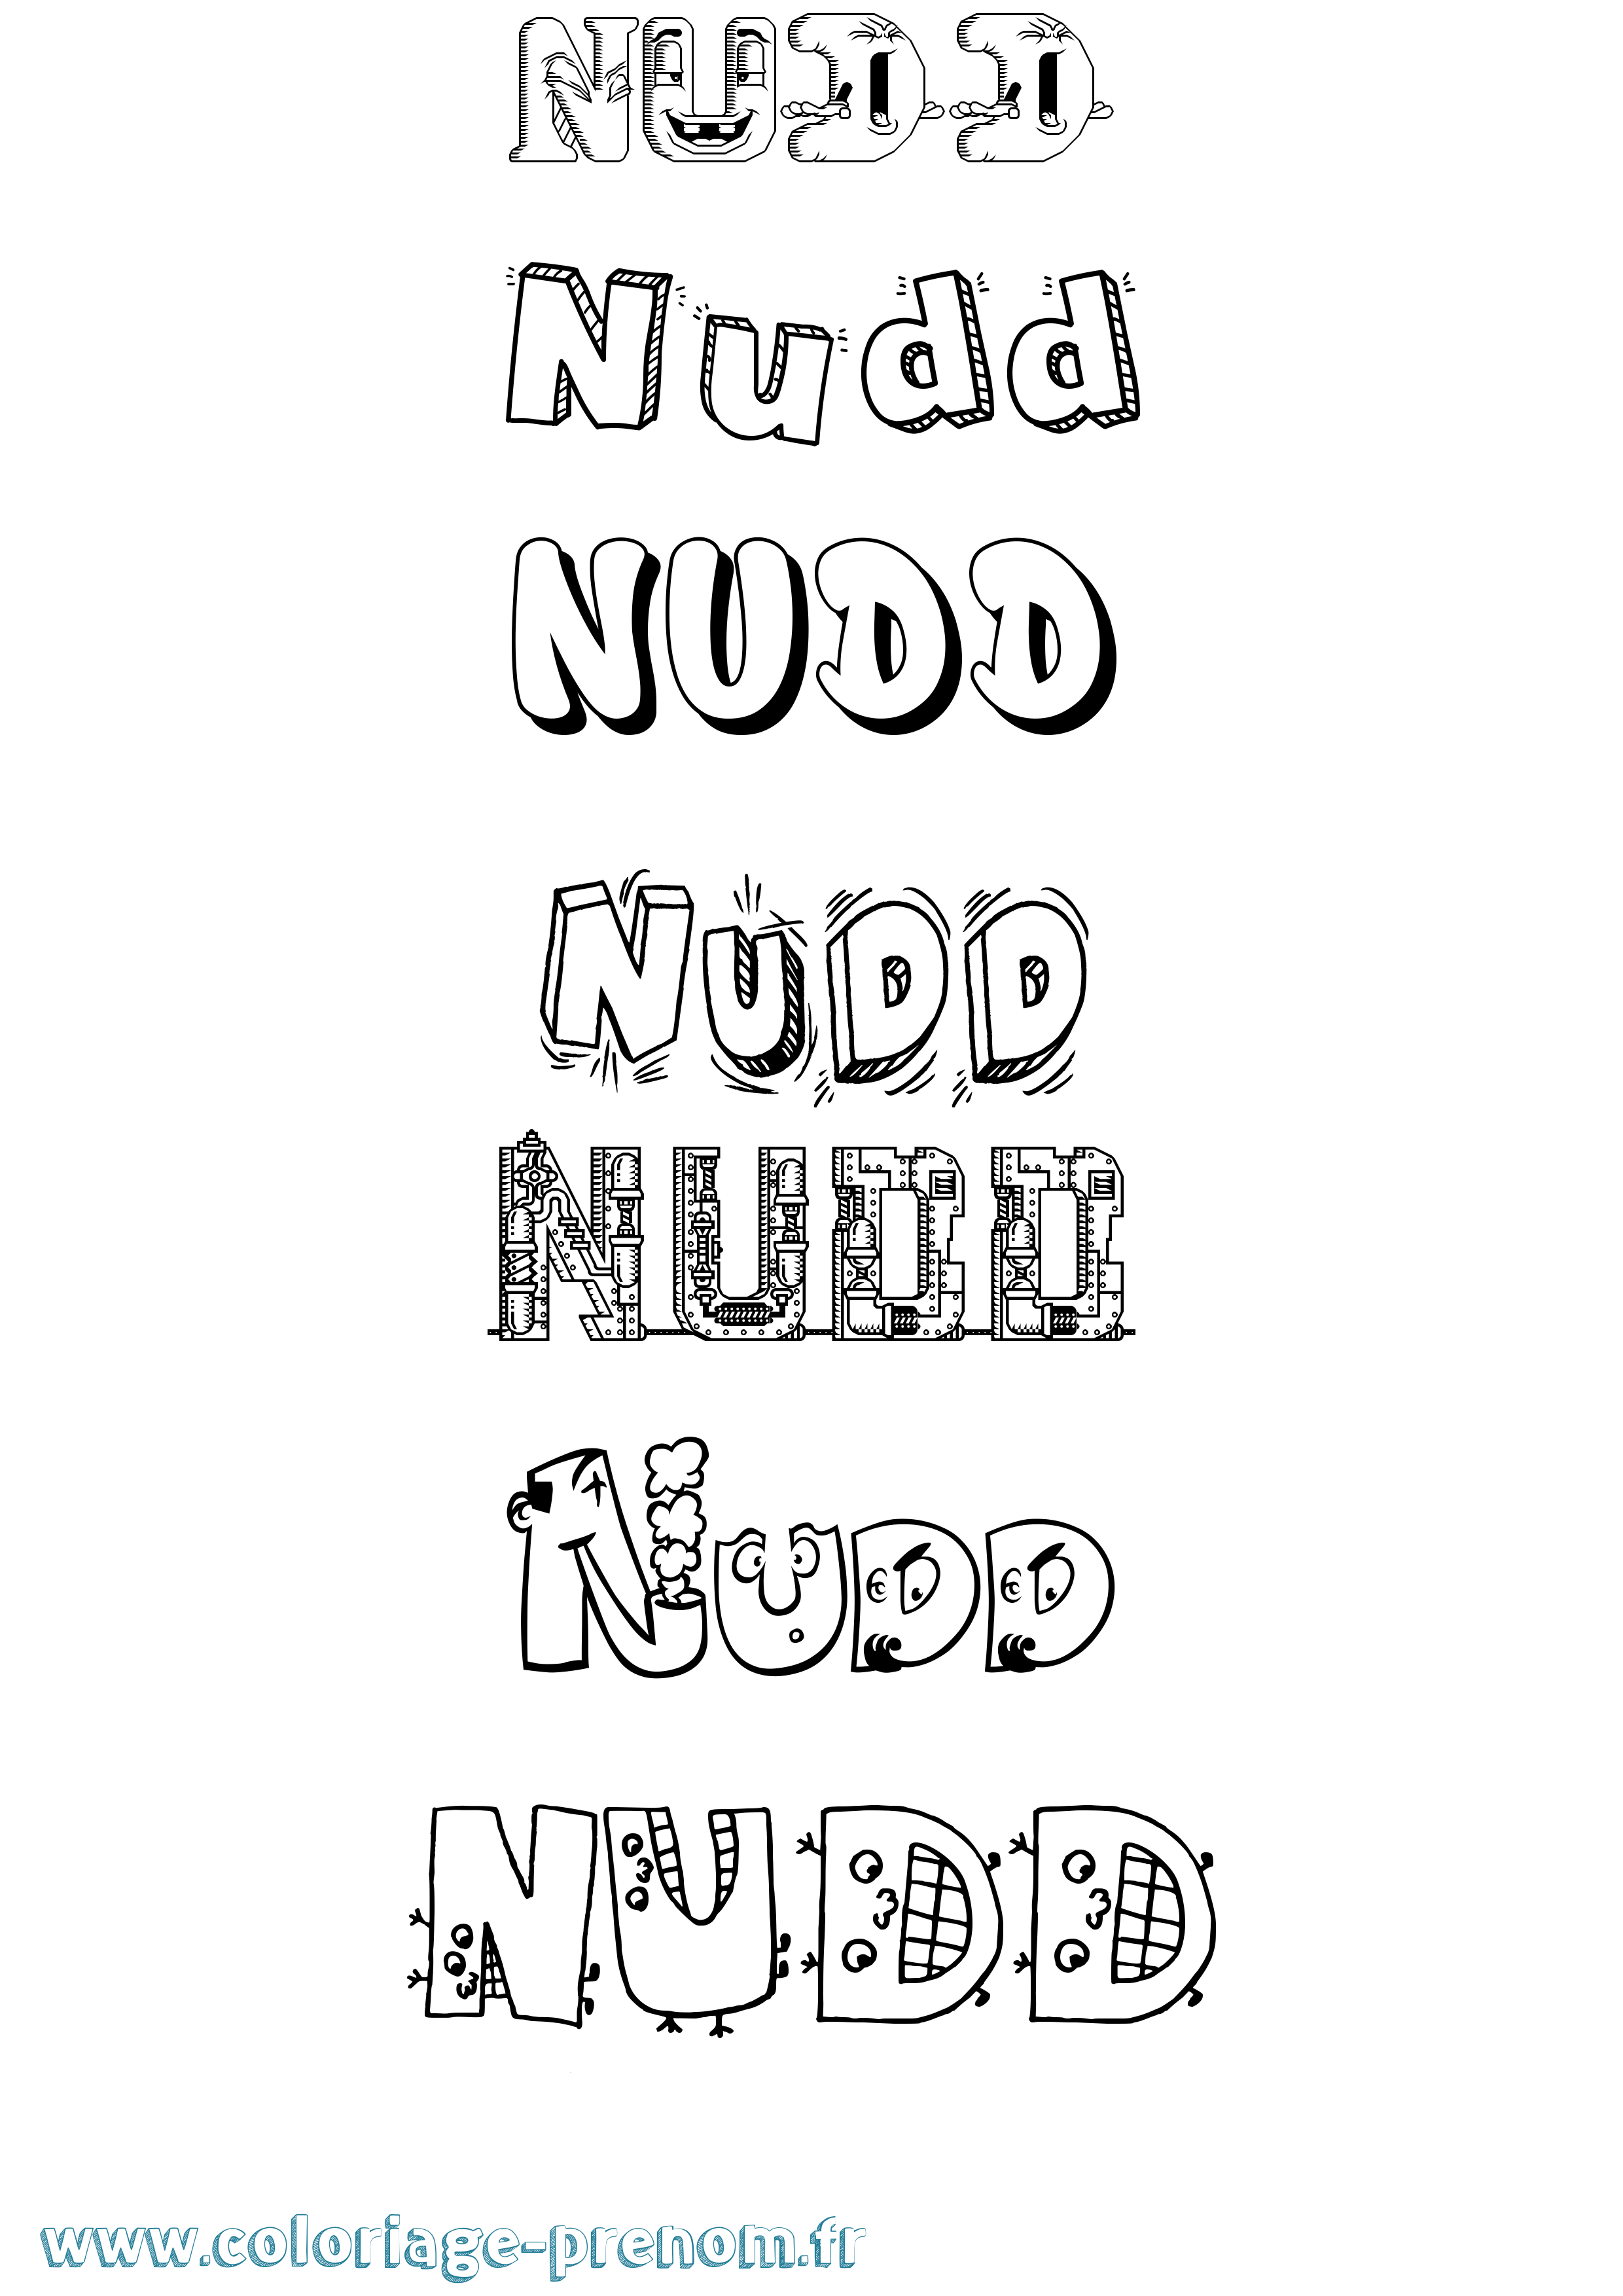 Coloriage prénom Nudd Fun